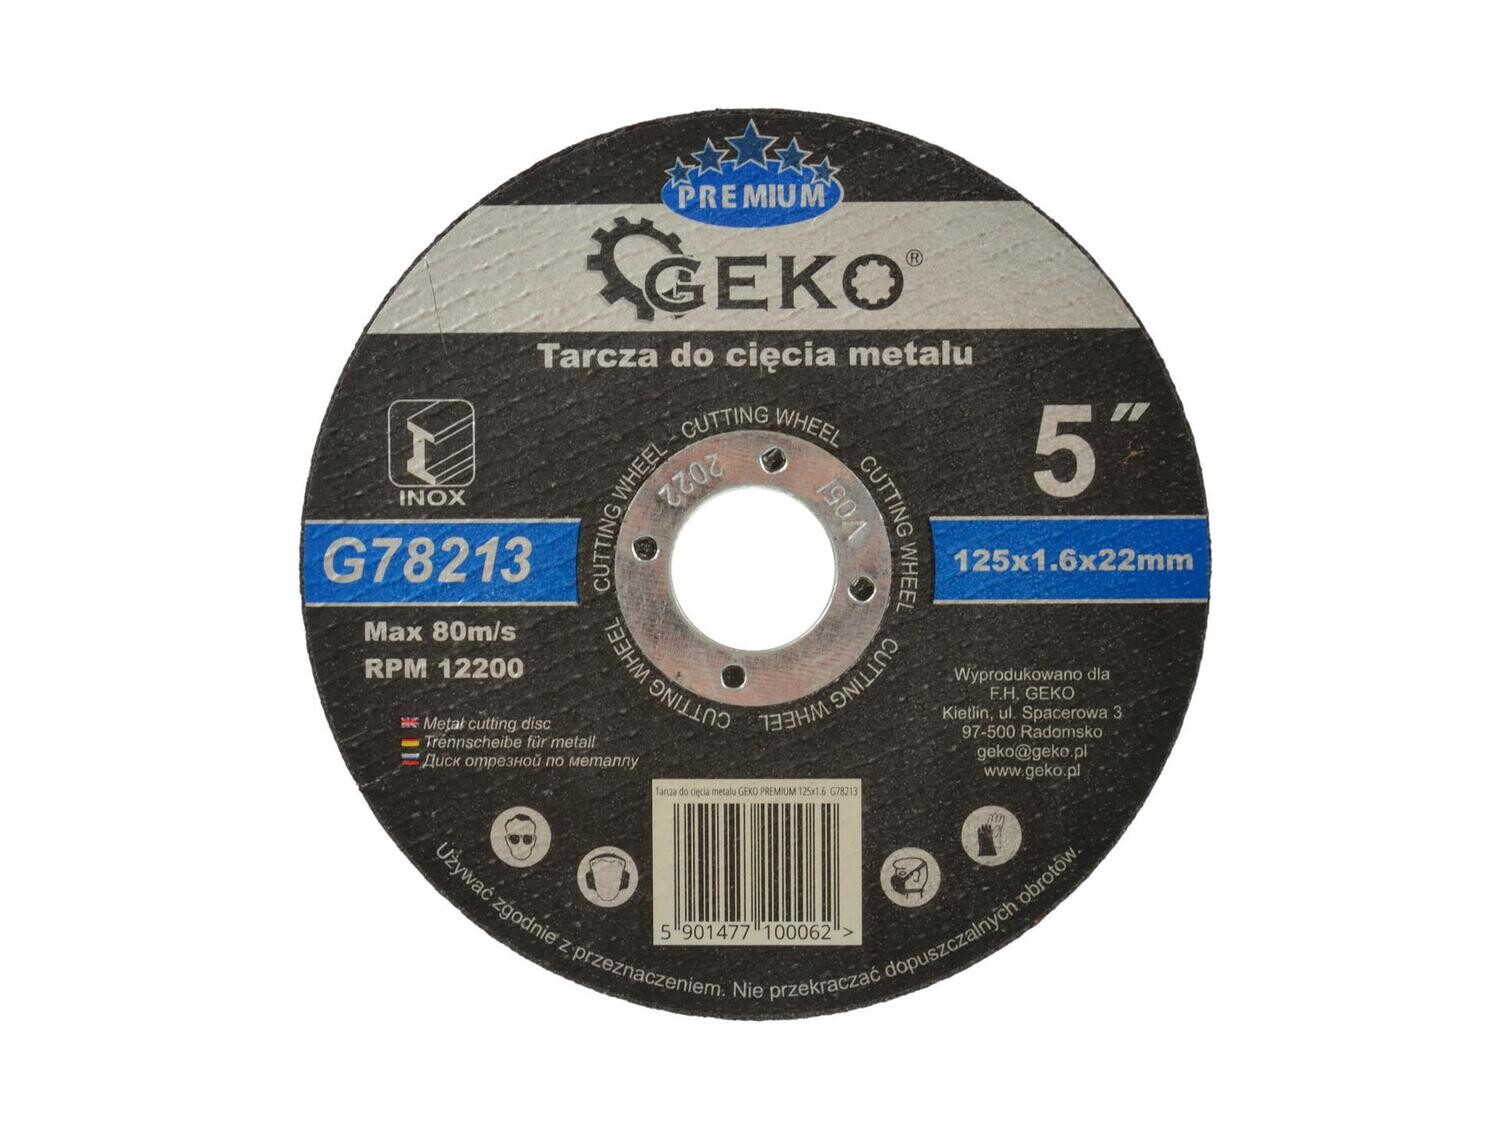 Metalltrennscheibe GEKO PREMIUM 125x1,6 Inox